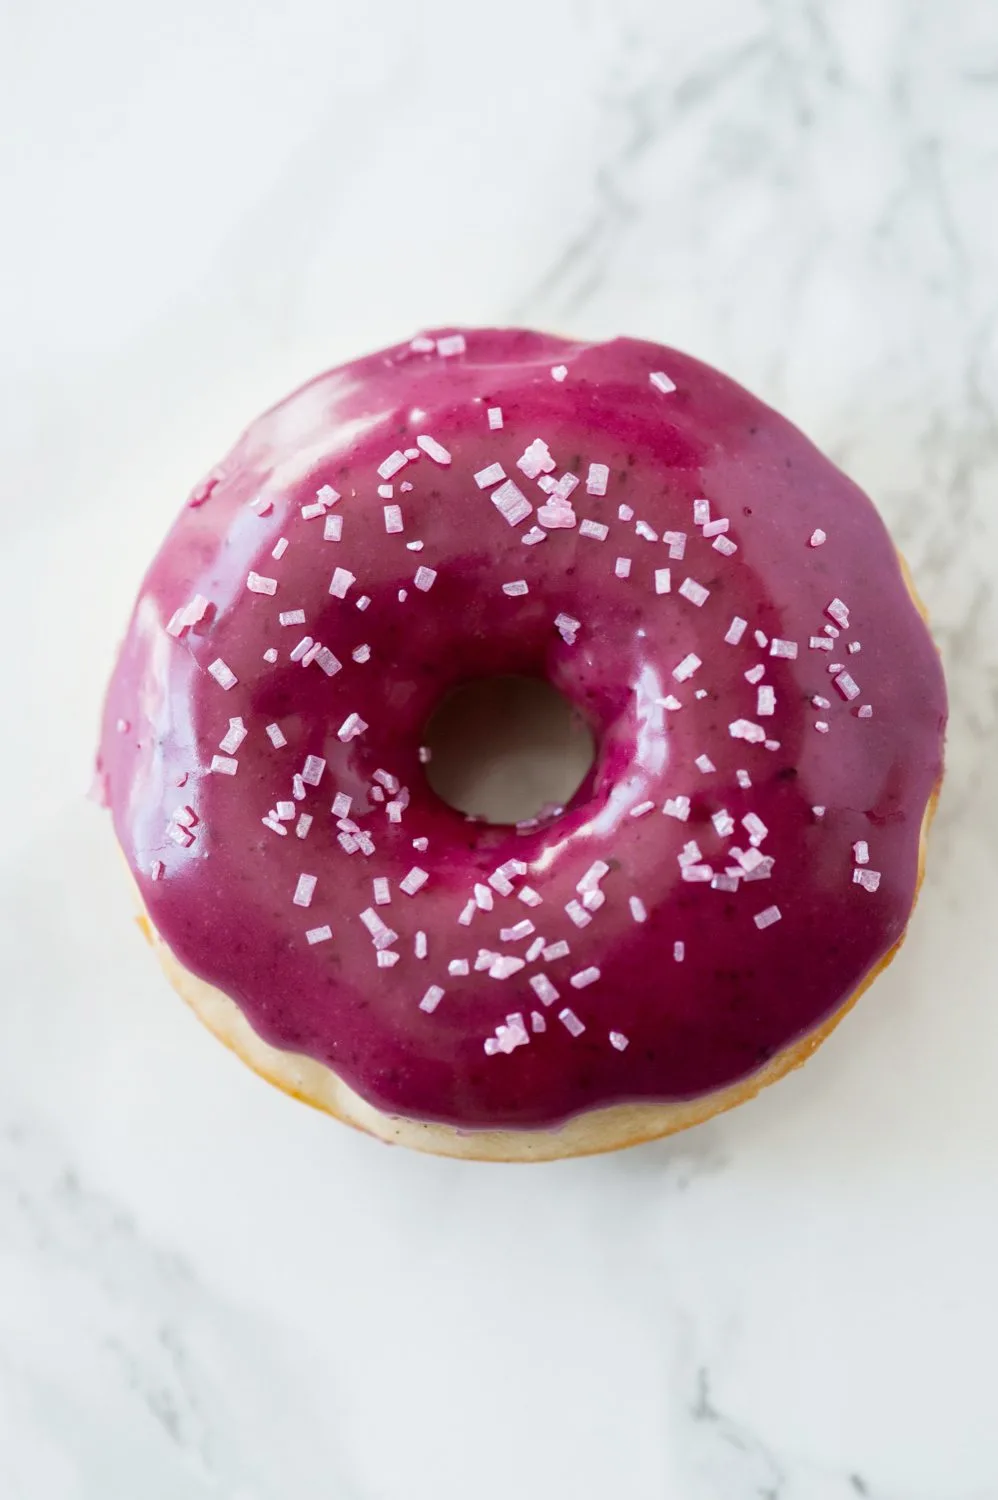 Vanilla Bean Cake Donuts with Blueberry Glaze | Donut Recipe from @cydconverse